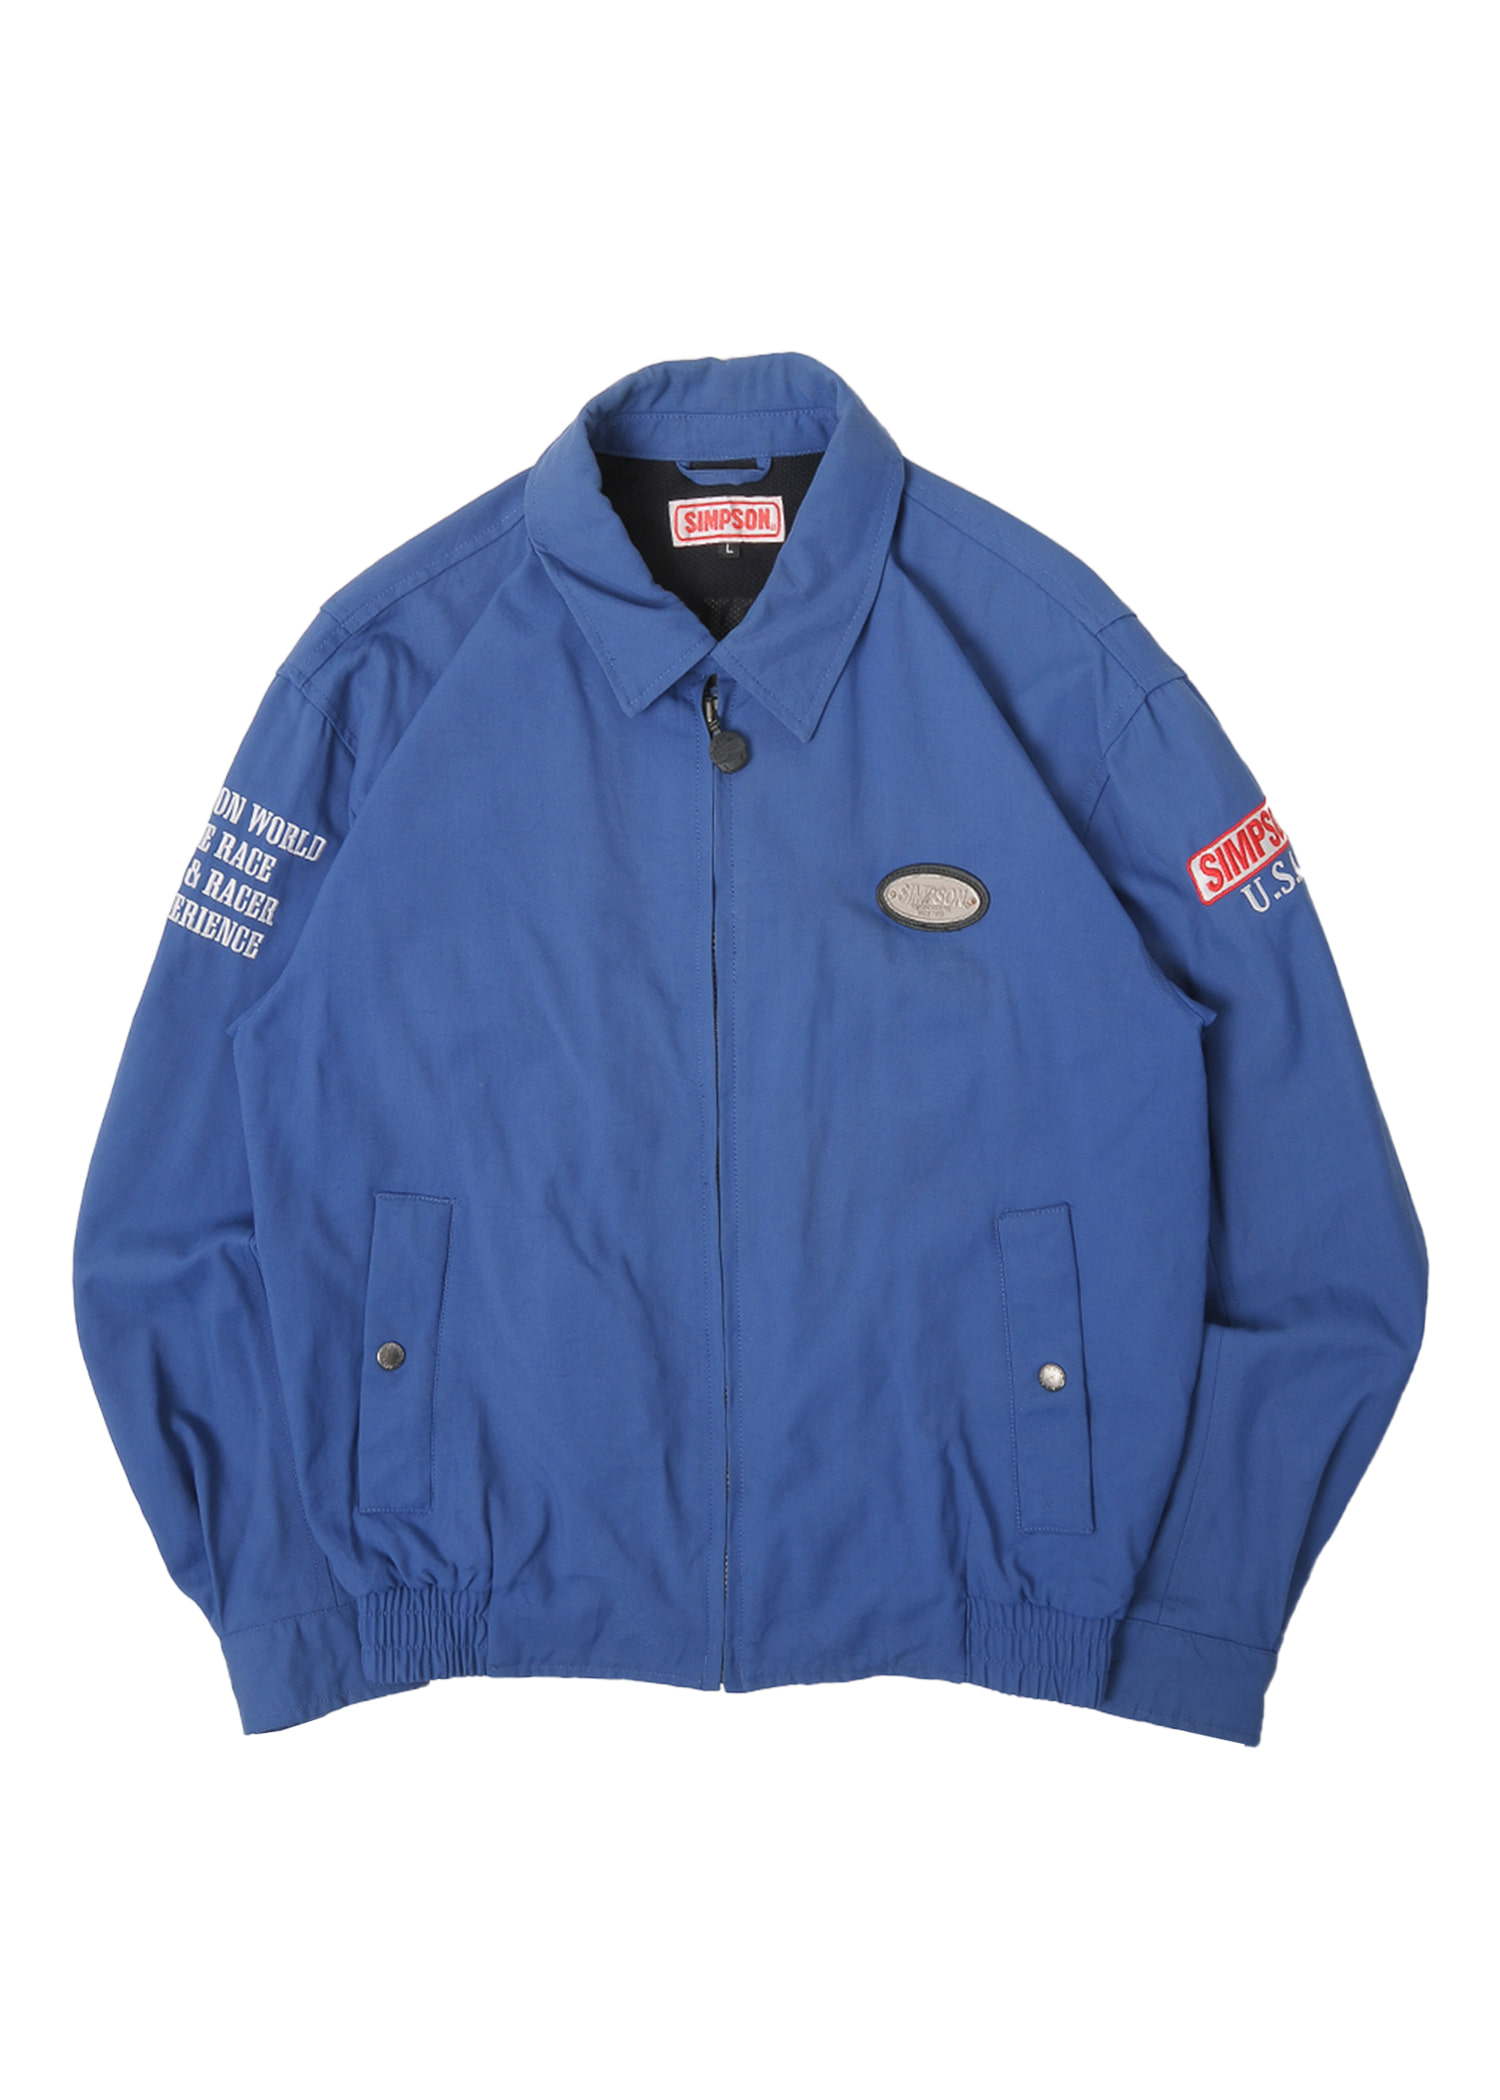 SIMPSON USA racing jacket